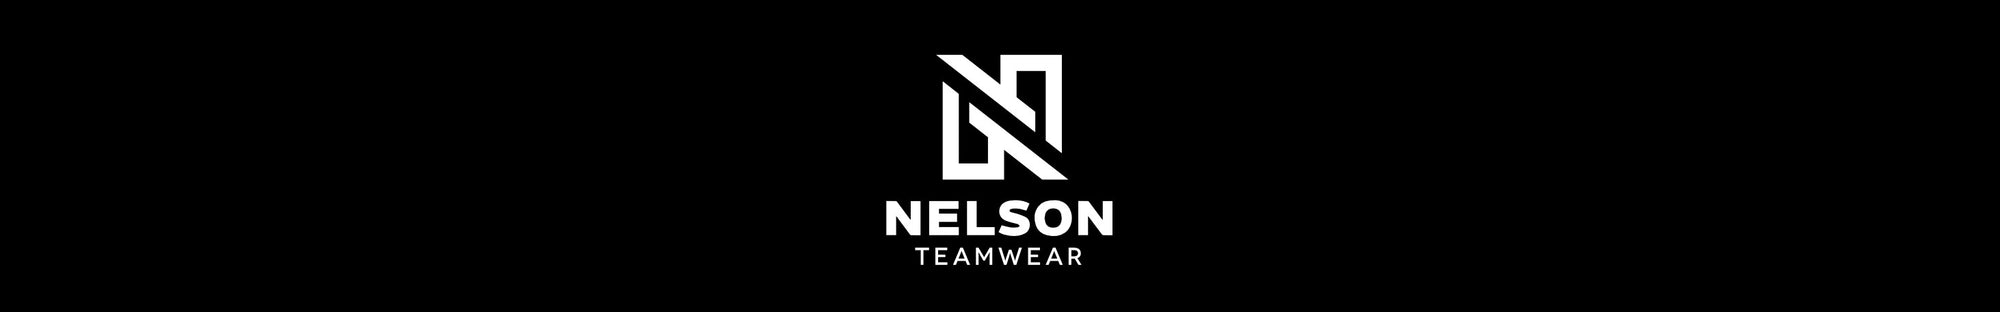 Nelson Teamwear